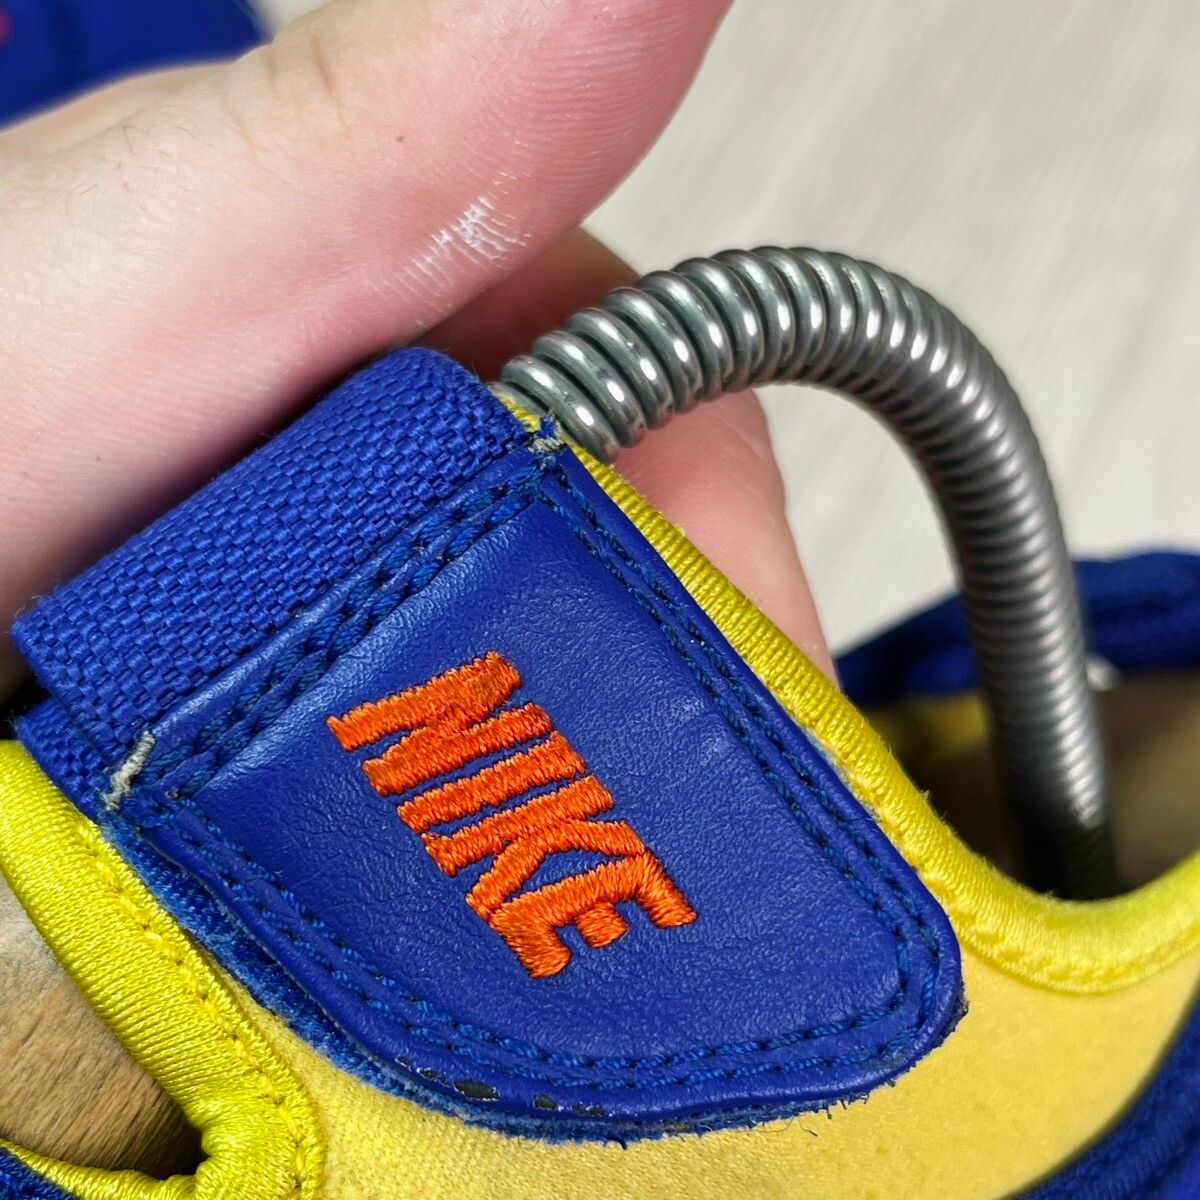 Nike Nike air rift vintage Size US 10 / EU 43 - 6 Thumbnail